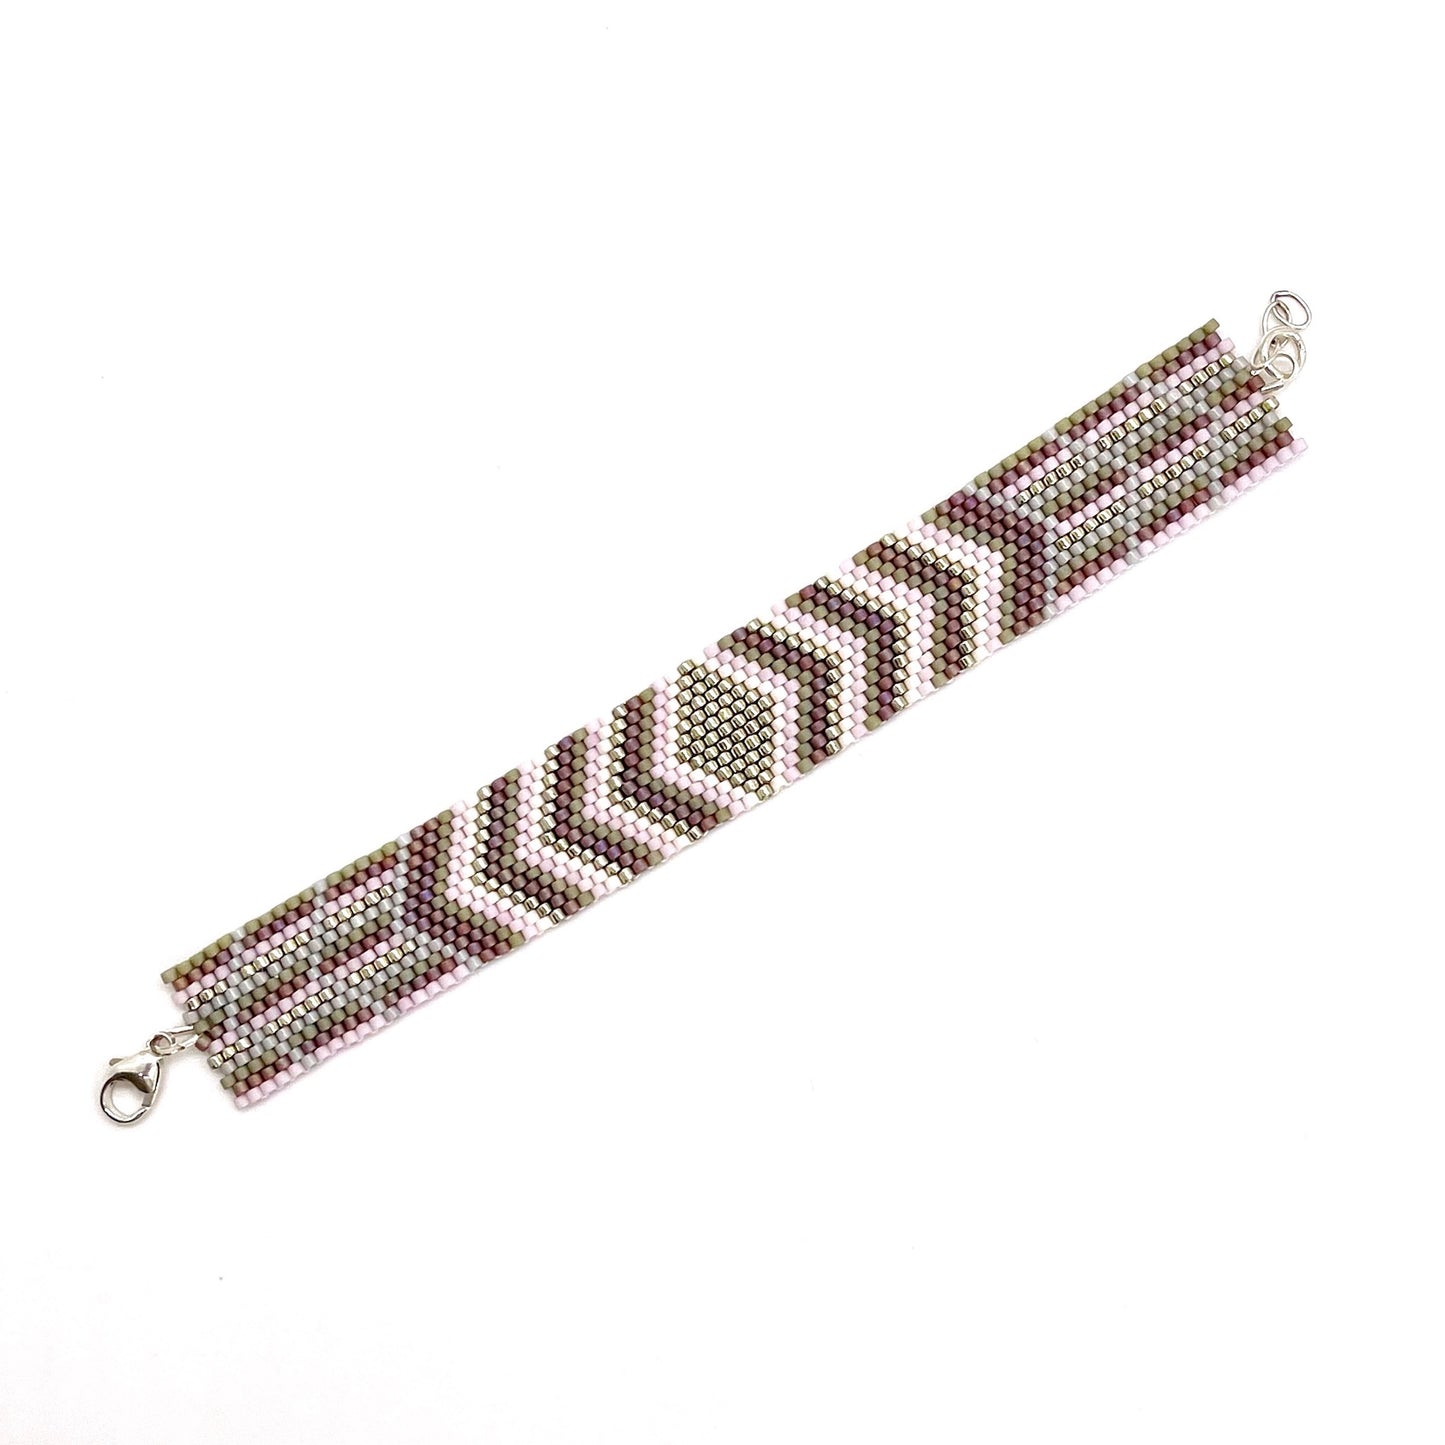 Diamond and chevron wide woven beaded miyuki bracelet in silver, mauve, white, and gray peyote pattern